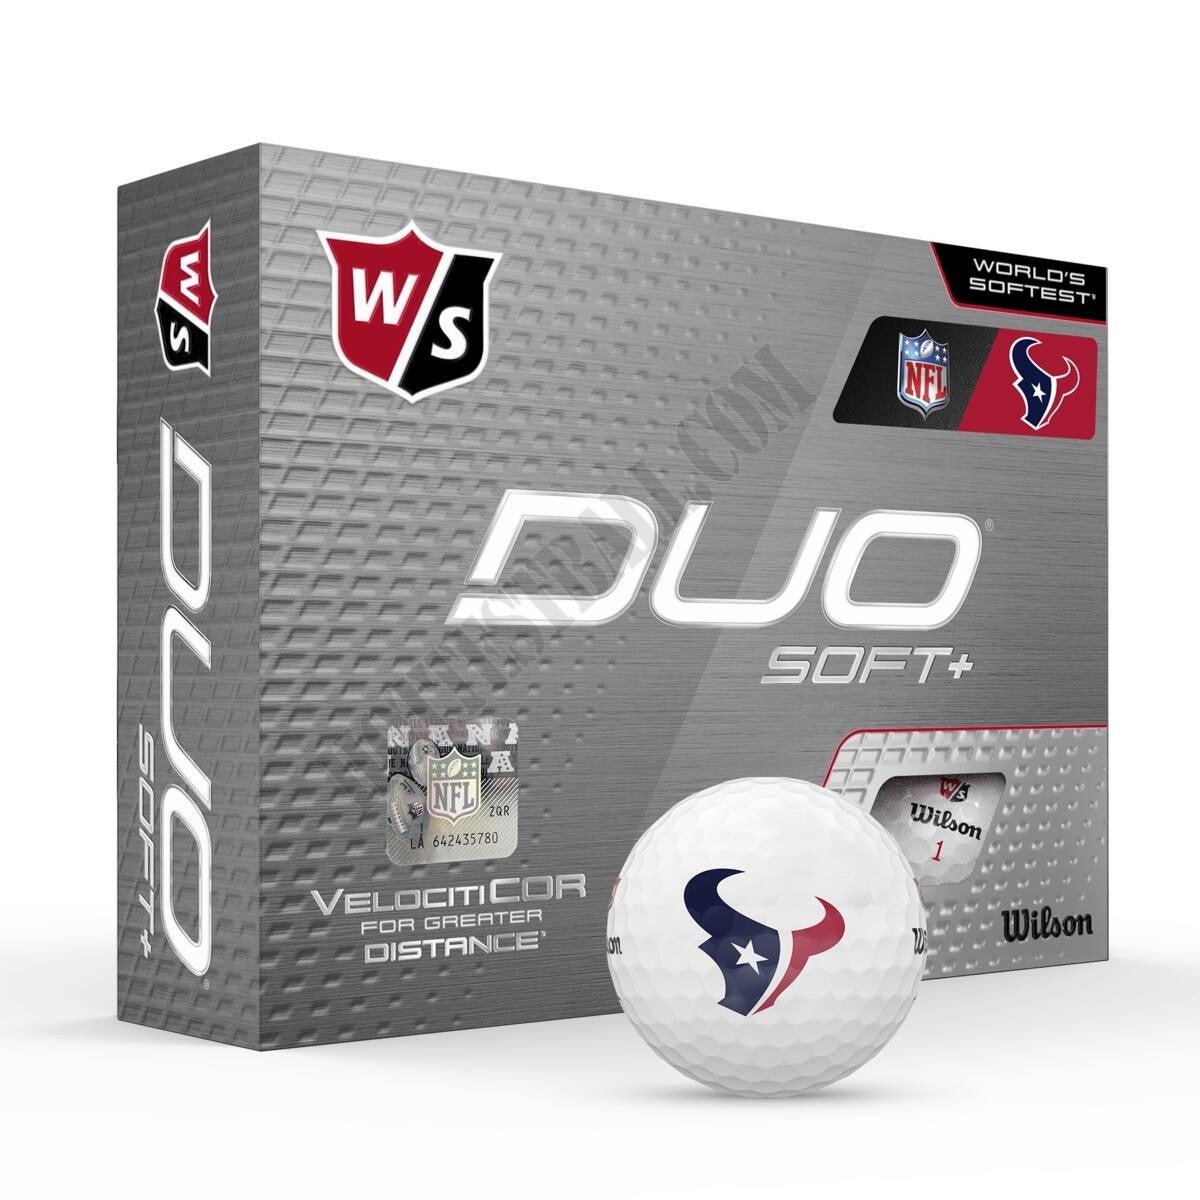 Duo Soft+ NFL Golf Balls - Houston Texans ● Wilson Promotions - Duo Soft+ NFL Golf Balls - Houston Texans ● Wilson Promotions